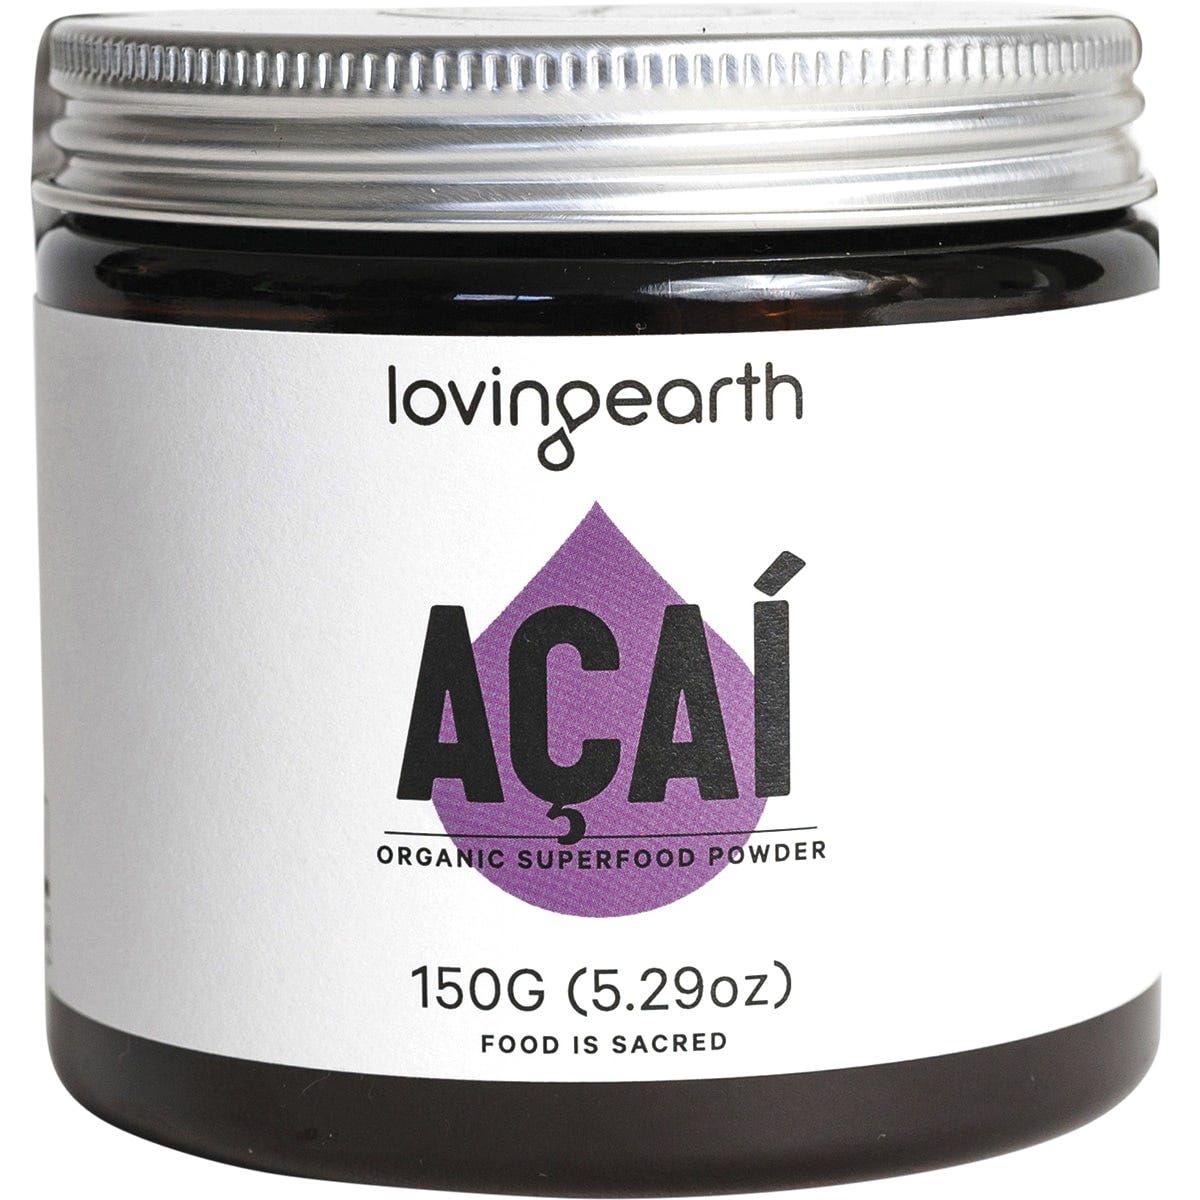 Loving Earth Acai Superfood Powder 150g - Dr Earth - Berries